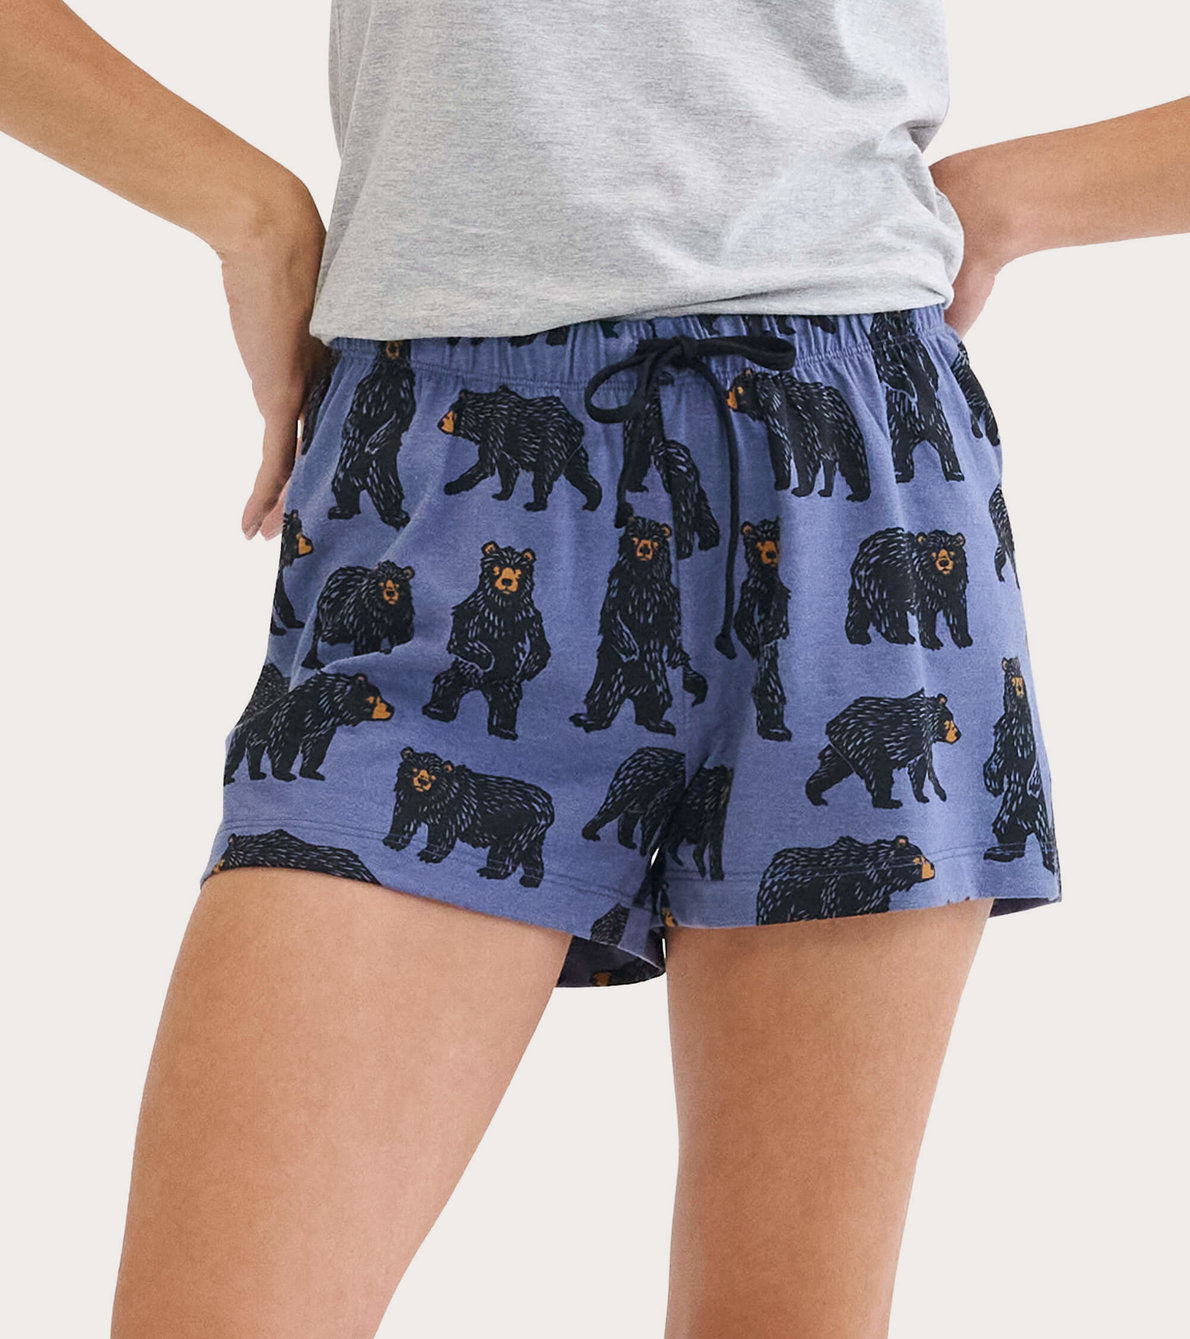 View larger image of Wild Bears Women's Sleep Shorts